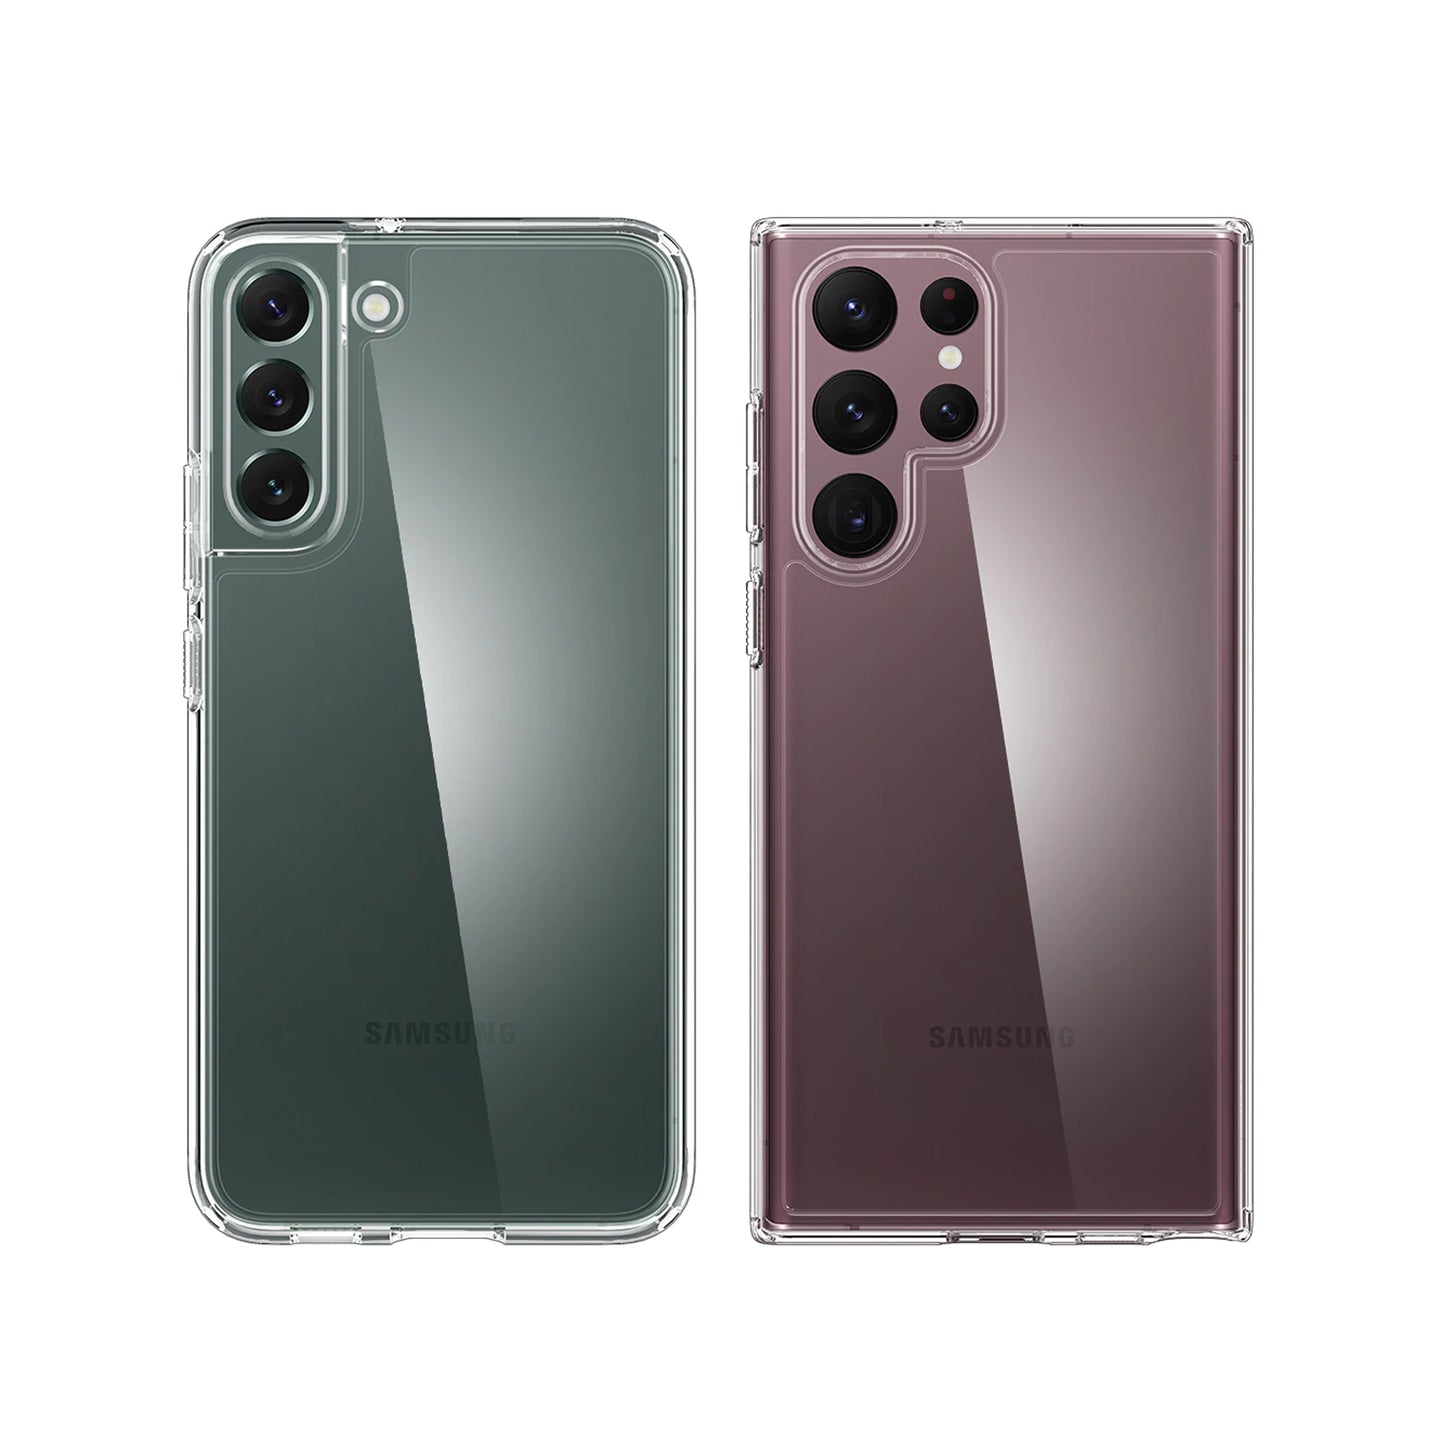 Spigen Ultra Hybrid Case for Samsung Galaxy S22 Plus - Crystal Clear (Barcode: 8809811855807 )